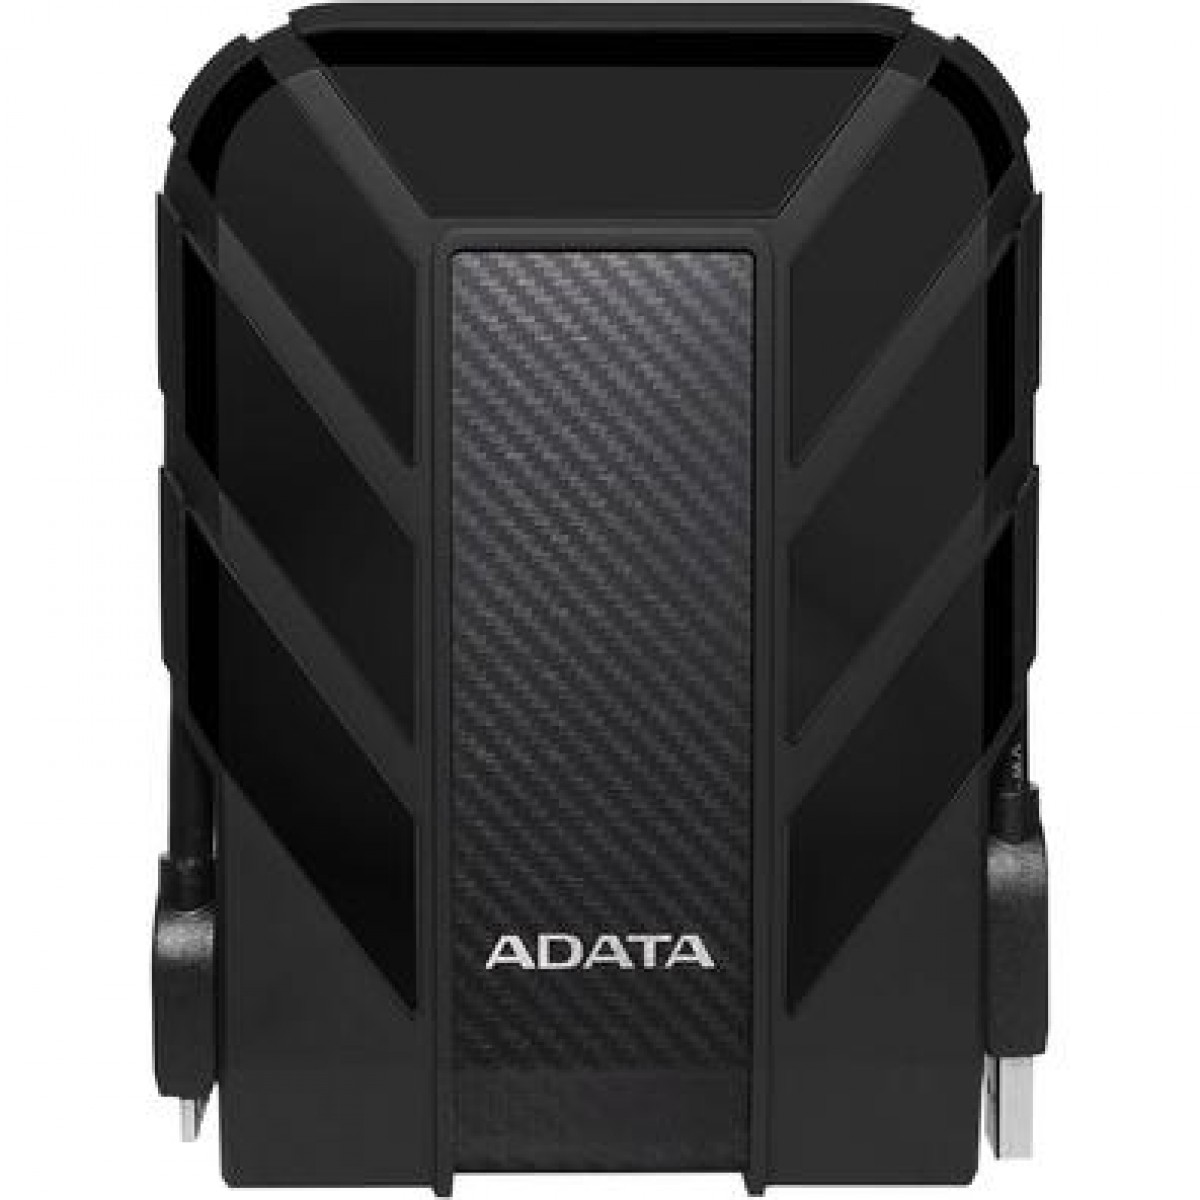 HD Externo Portátil Adata HD710 Pro 1TB, USB 3.2, Black, AHD710P-1TU31-CBK